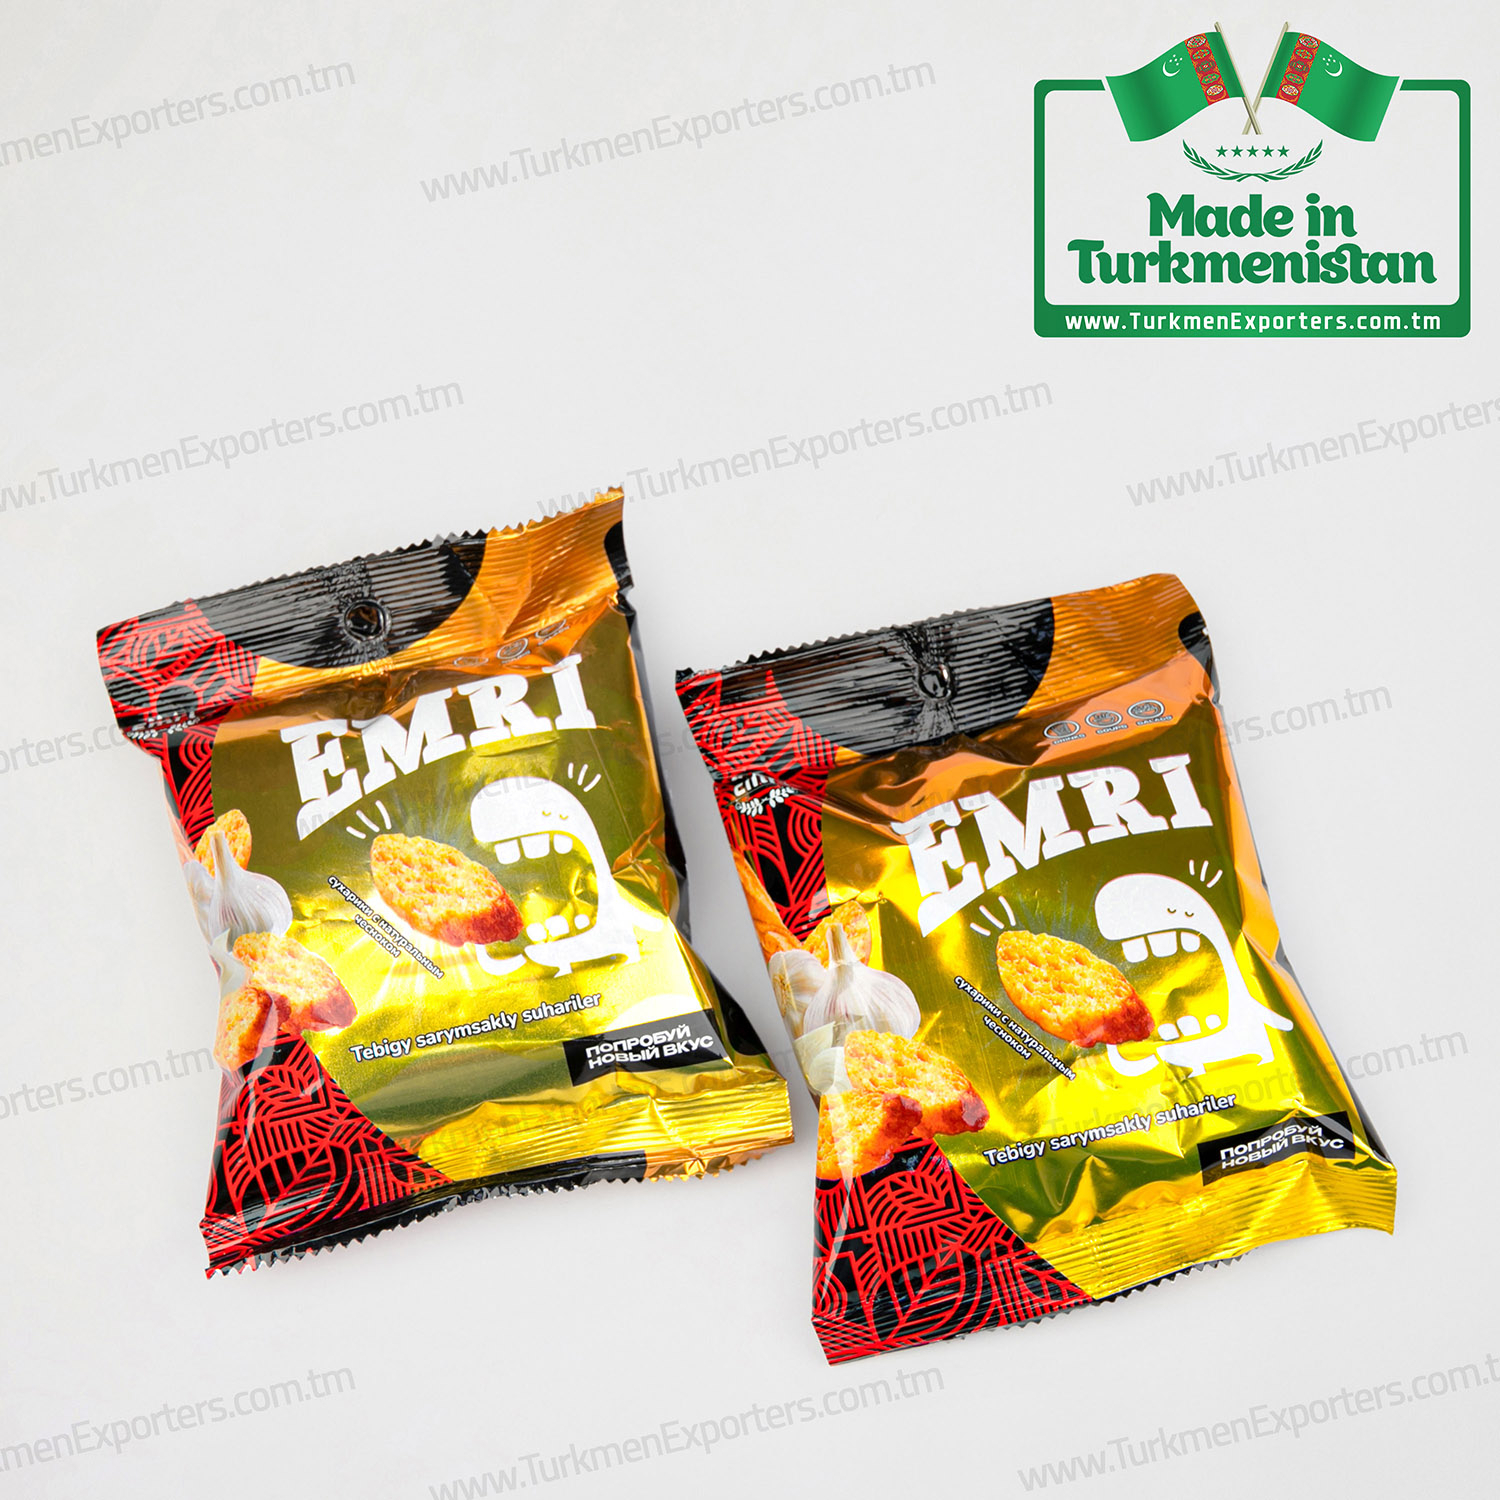 Croutons wholesale for export from Turkmenistan | Esasy Sebap individual enterprise